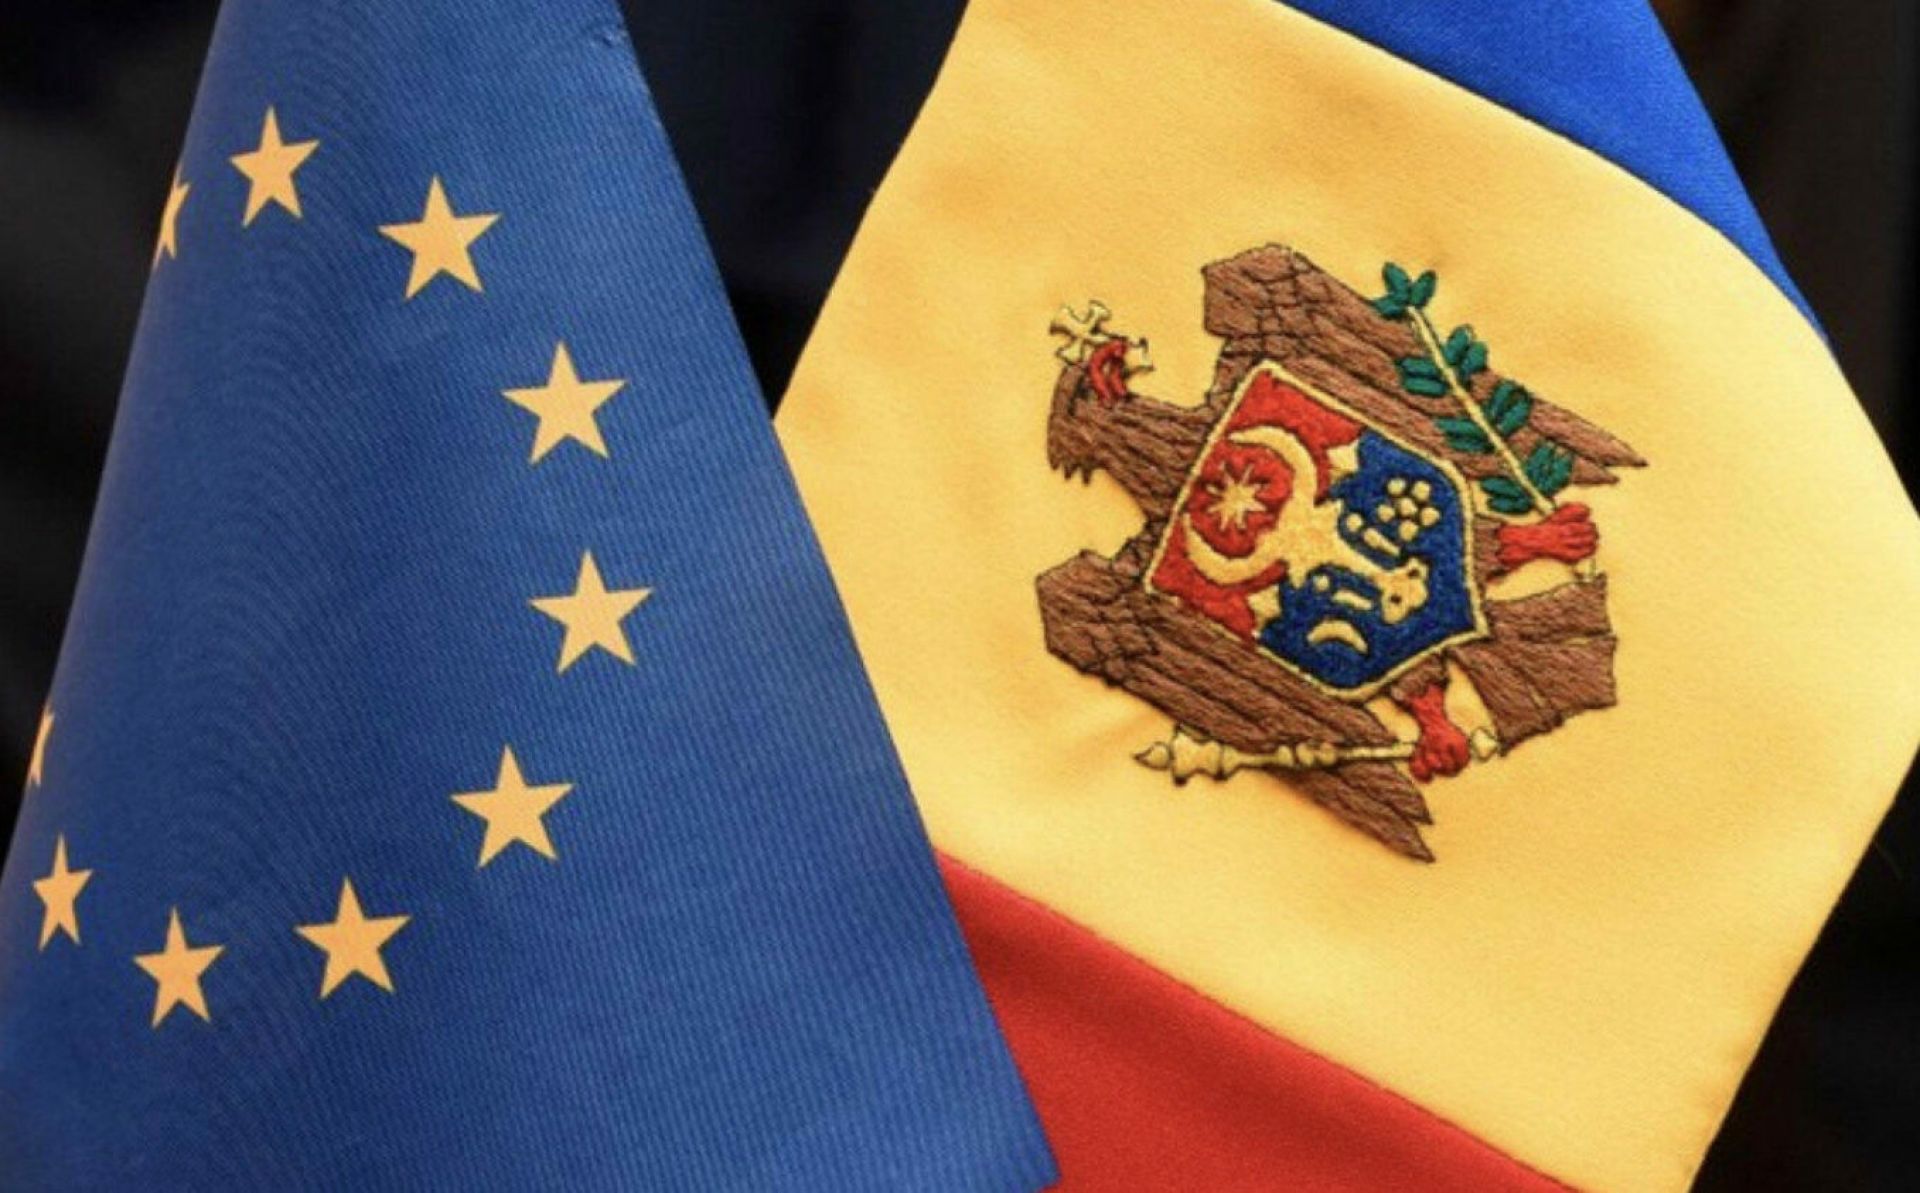 Opinion on Moldova’s application for membership of the European Union